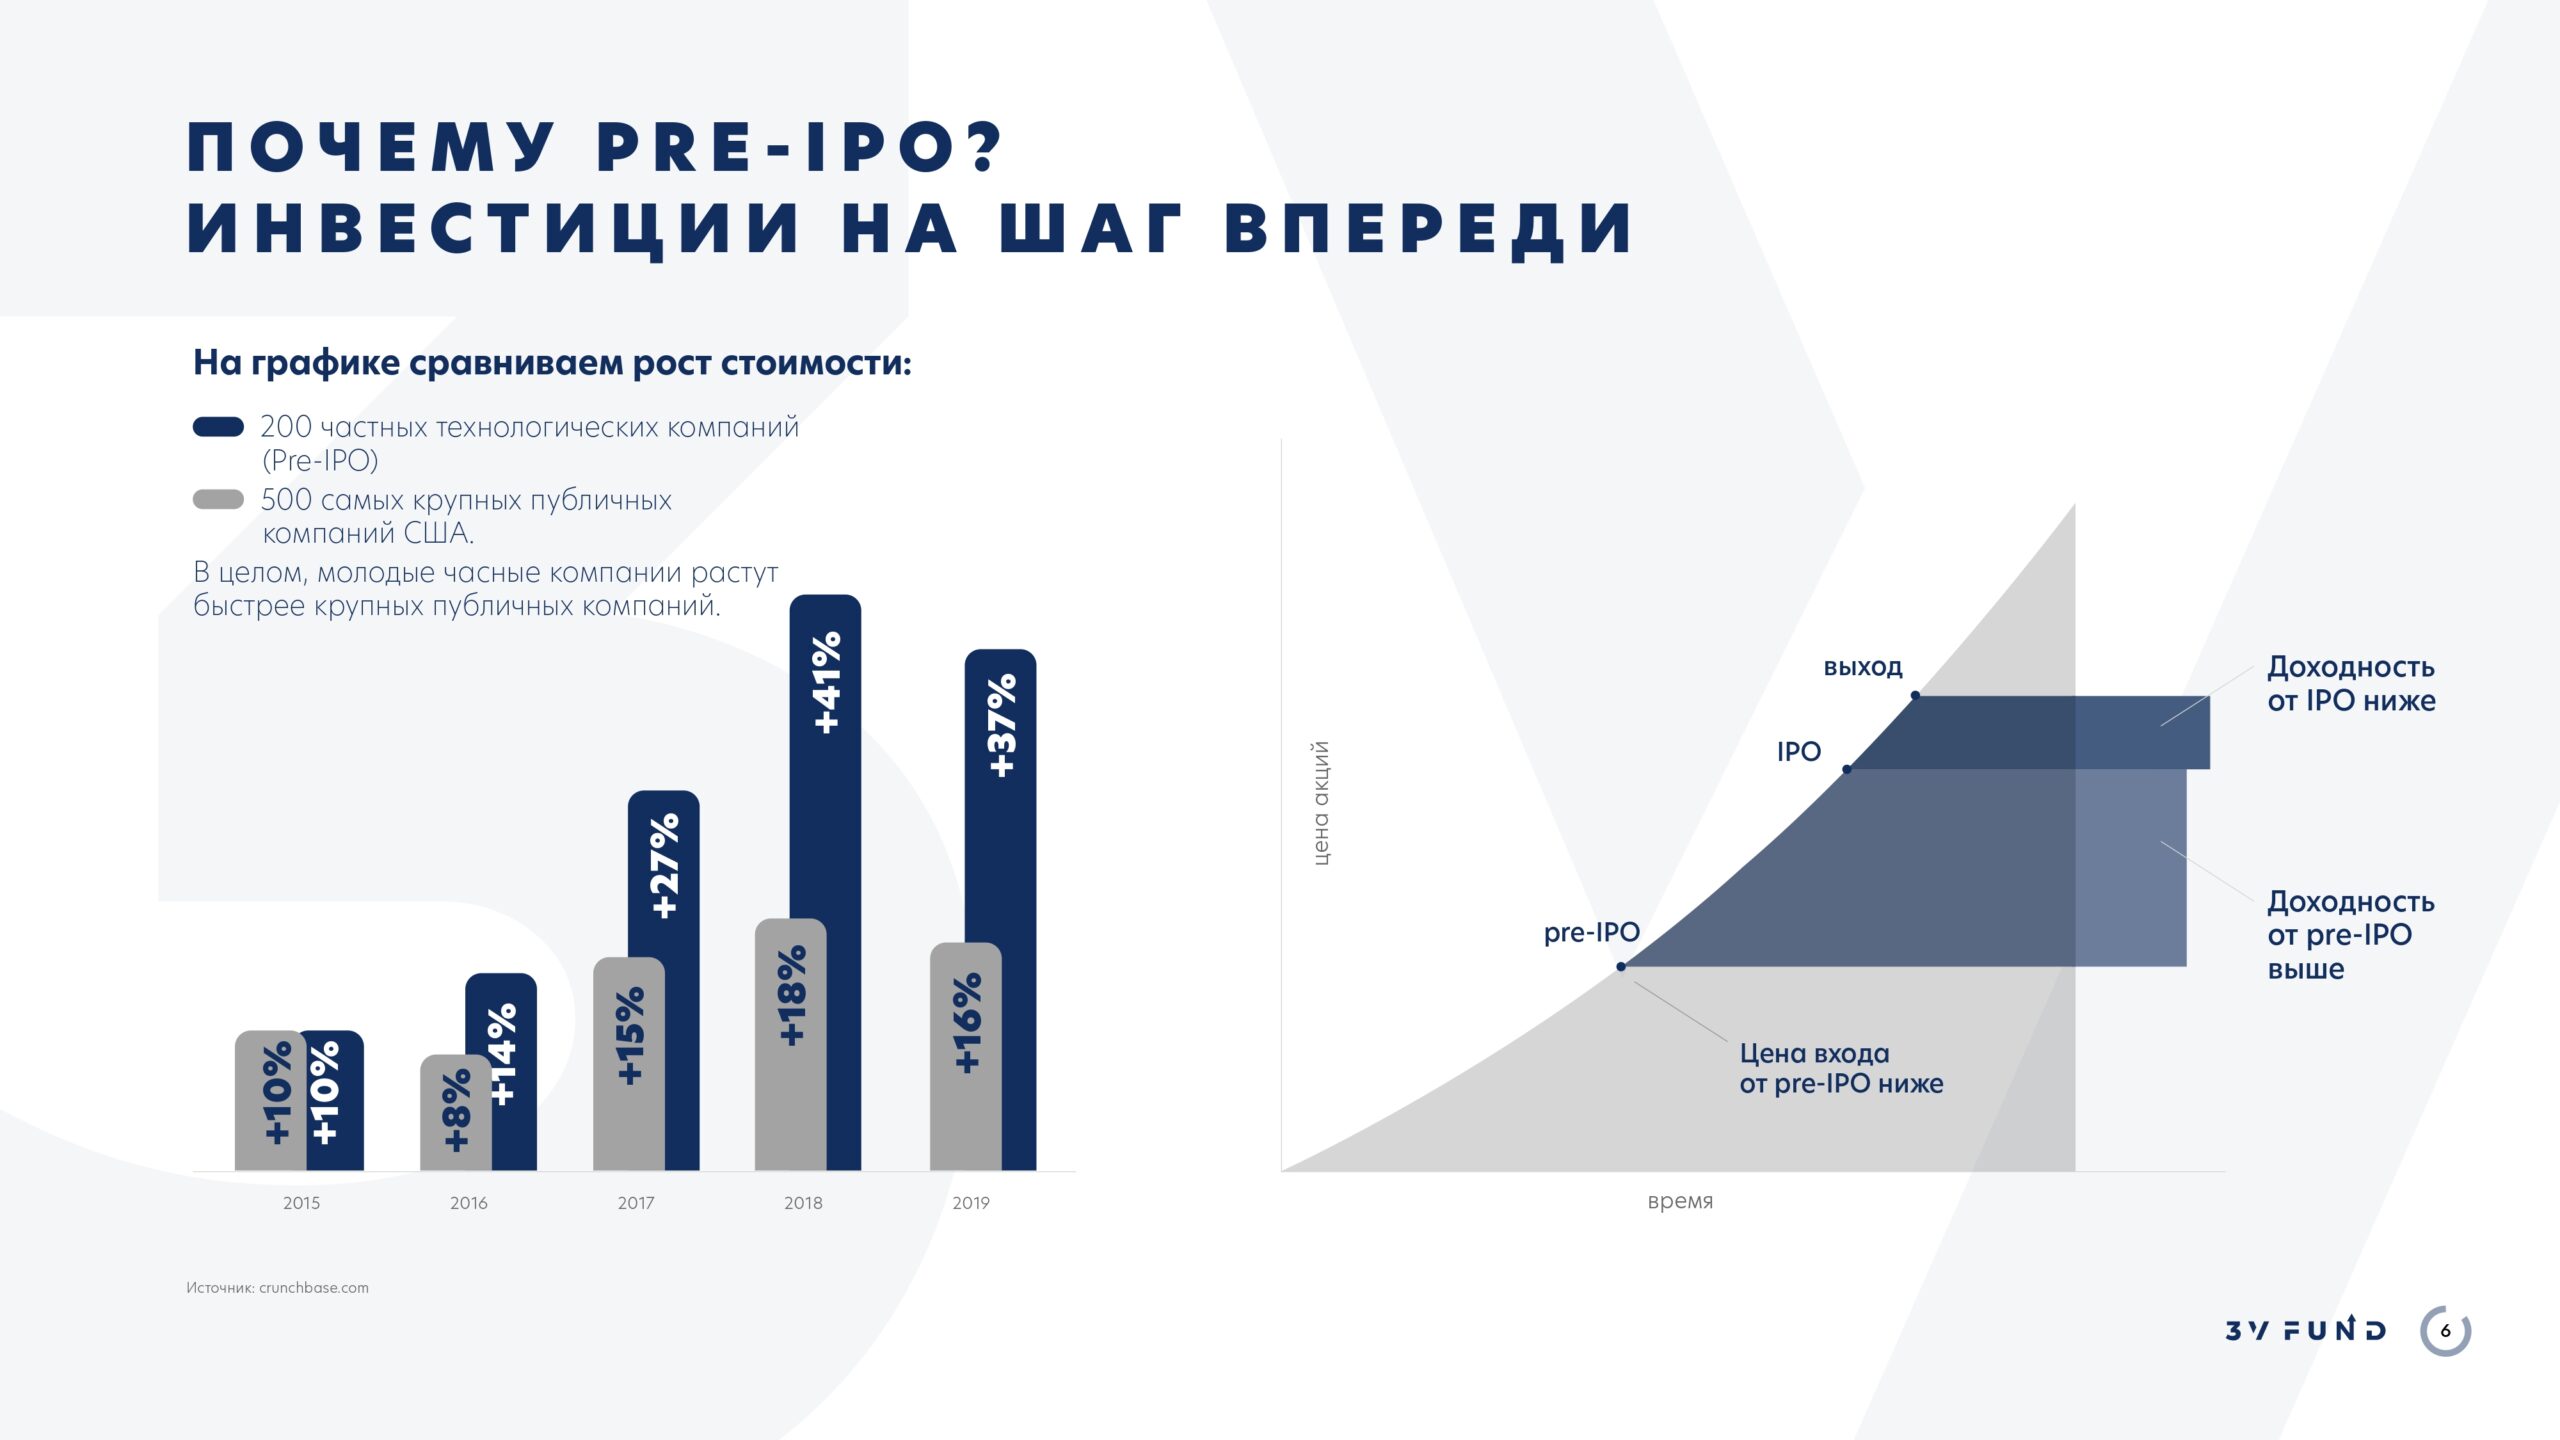 Презентация для инвестиционного фонда в сфере Pre-IPO слайд 4